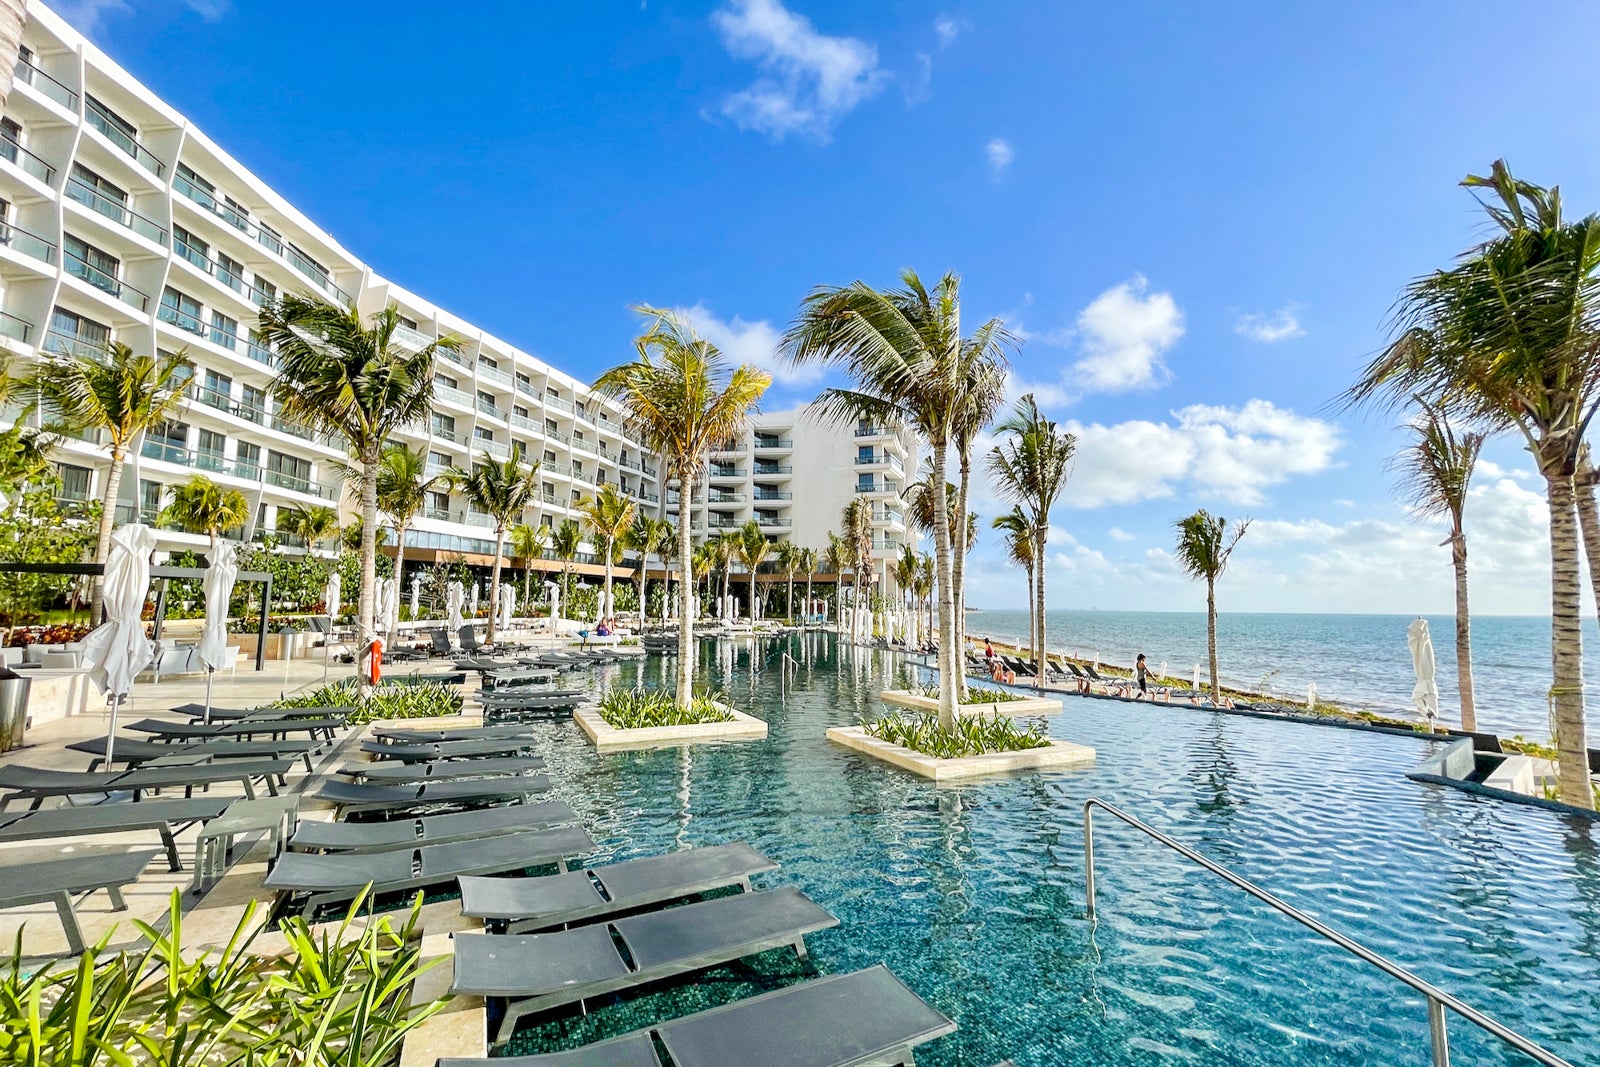 Beachside pool at Hilton Cancun